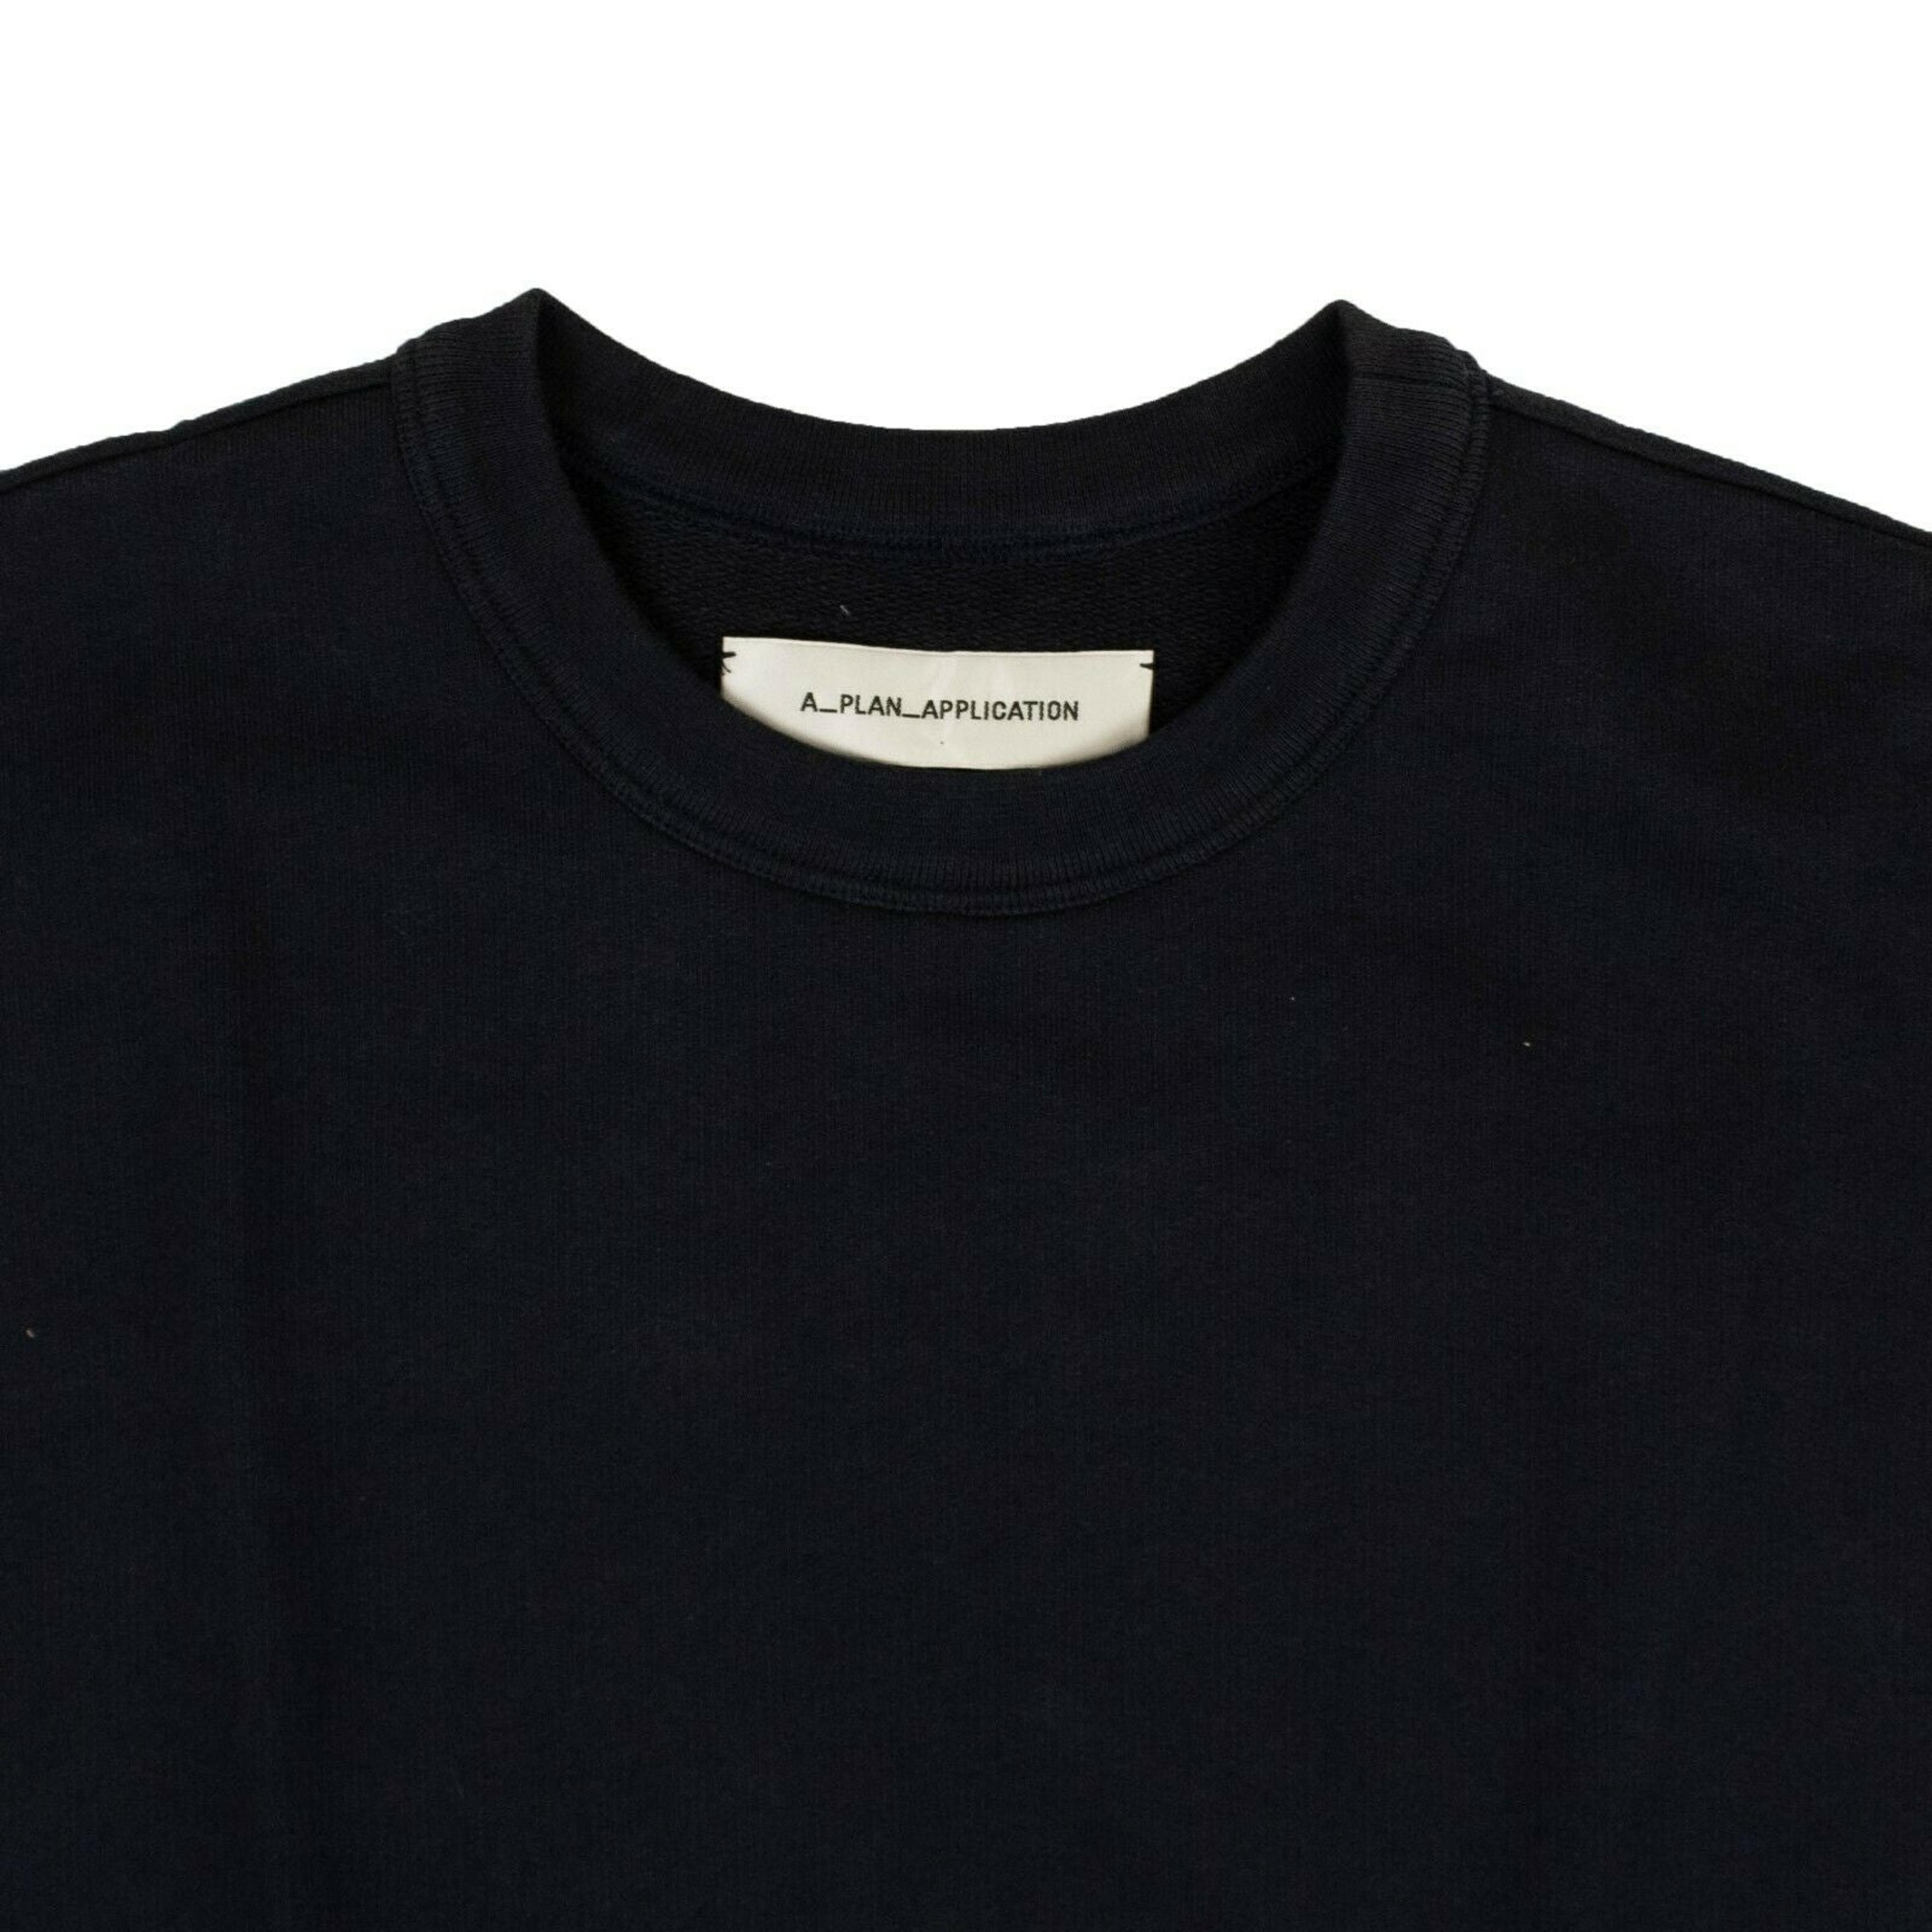 Alternate View 2 of Navy Blue Cotton Cut-Off Sleeves Sweatshirt